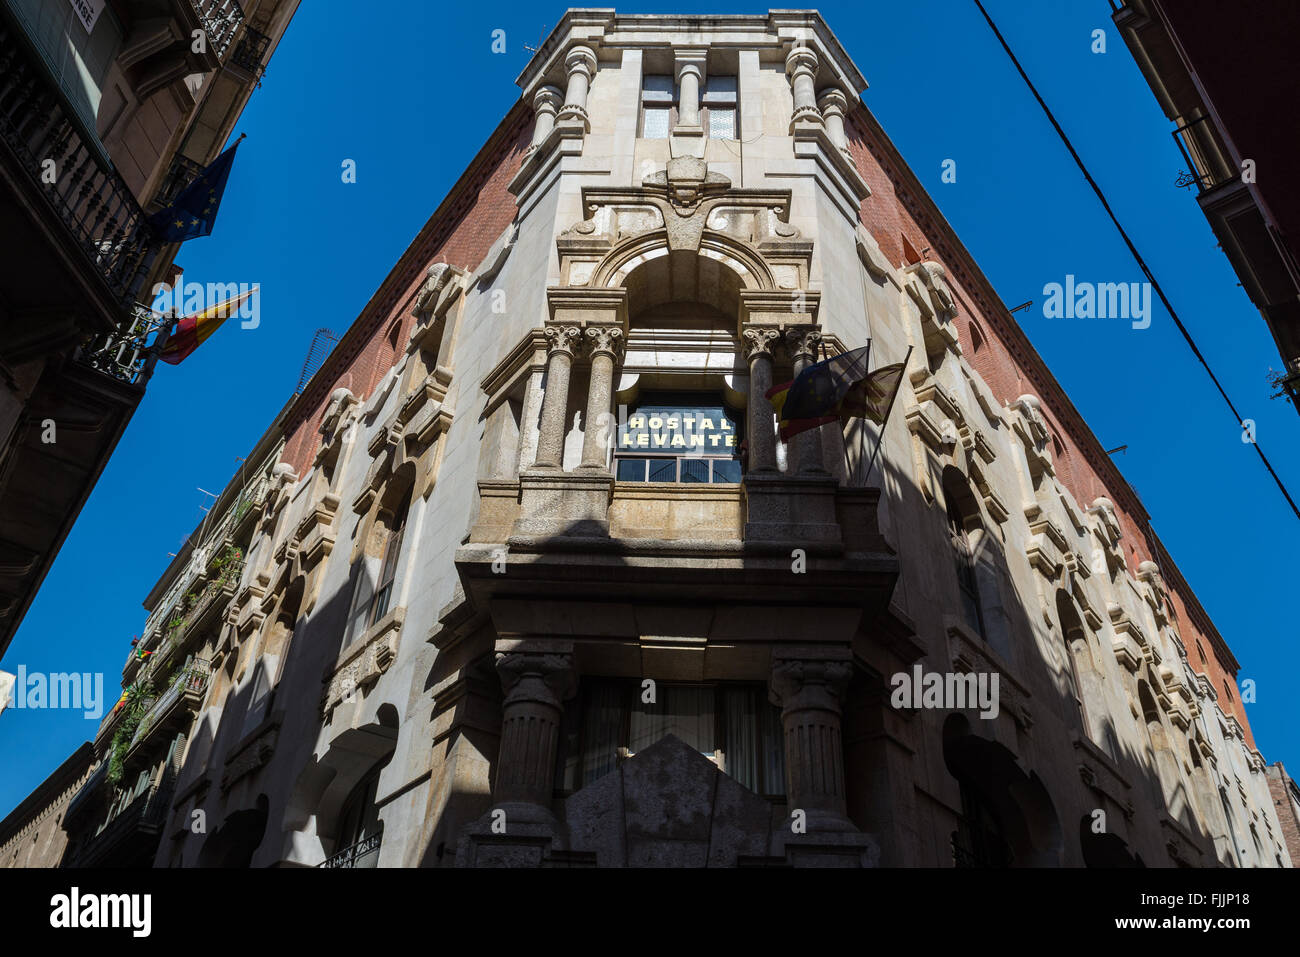 Hostal Levante at Gothic Quarter (Barri Gotic or El Gotico), Ciutat Vella district in Barcelona, Spain Stock Photo